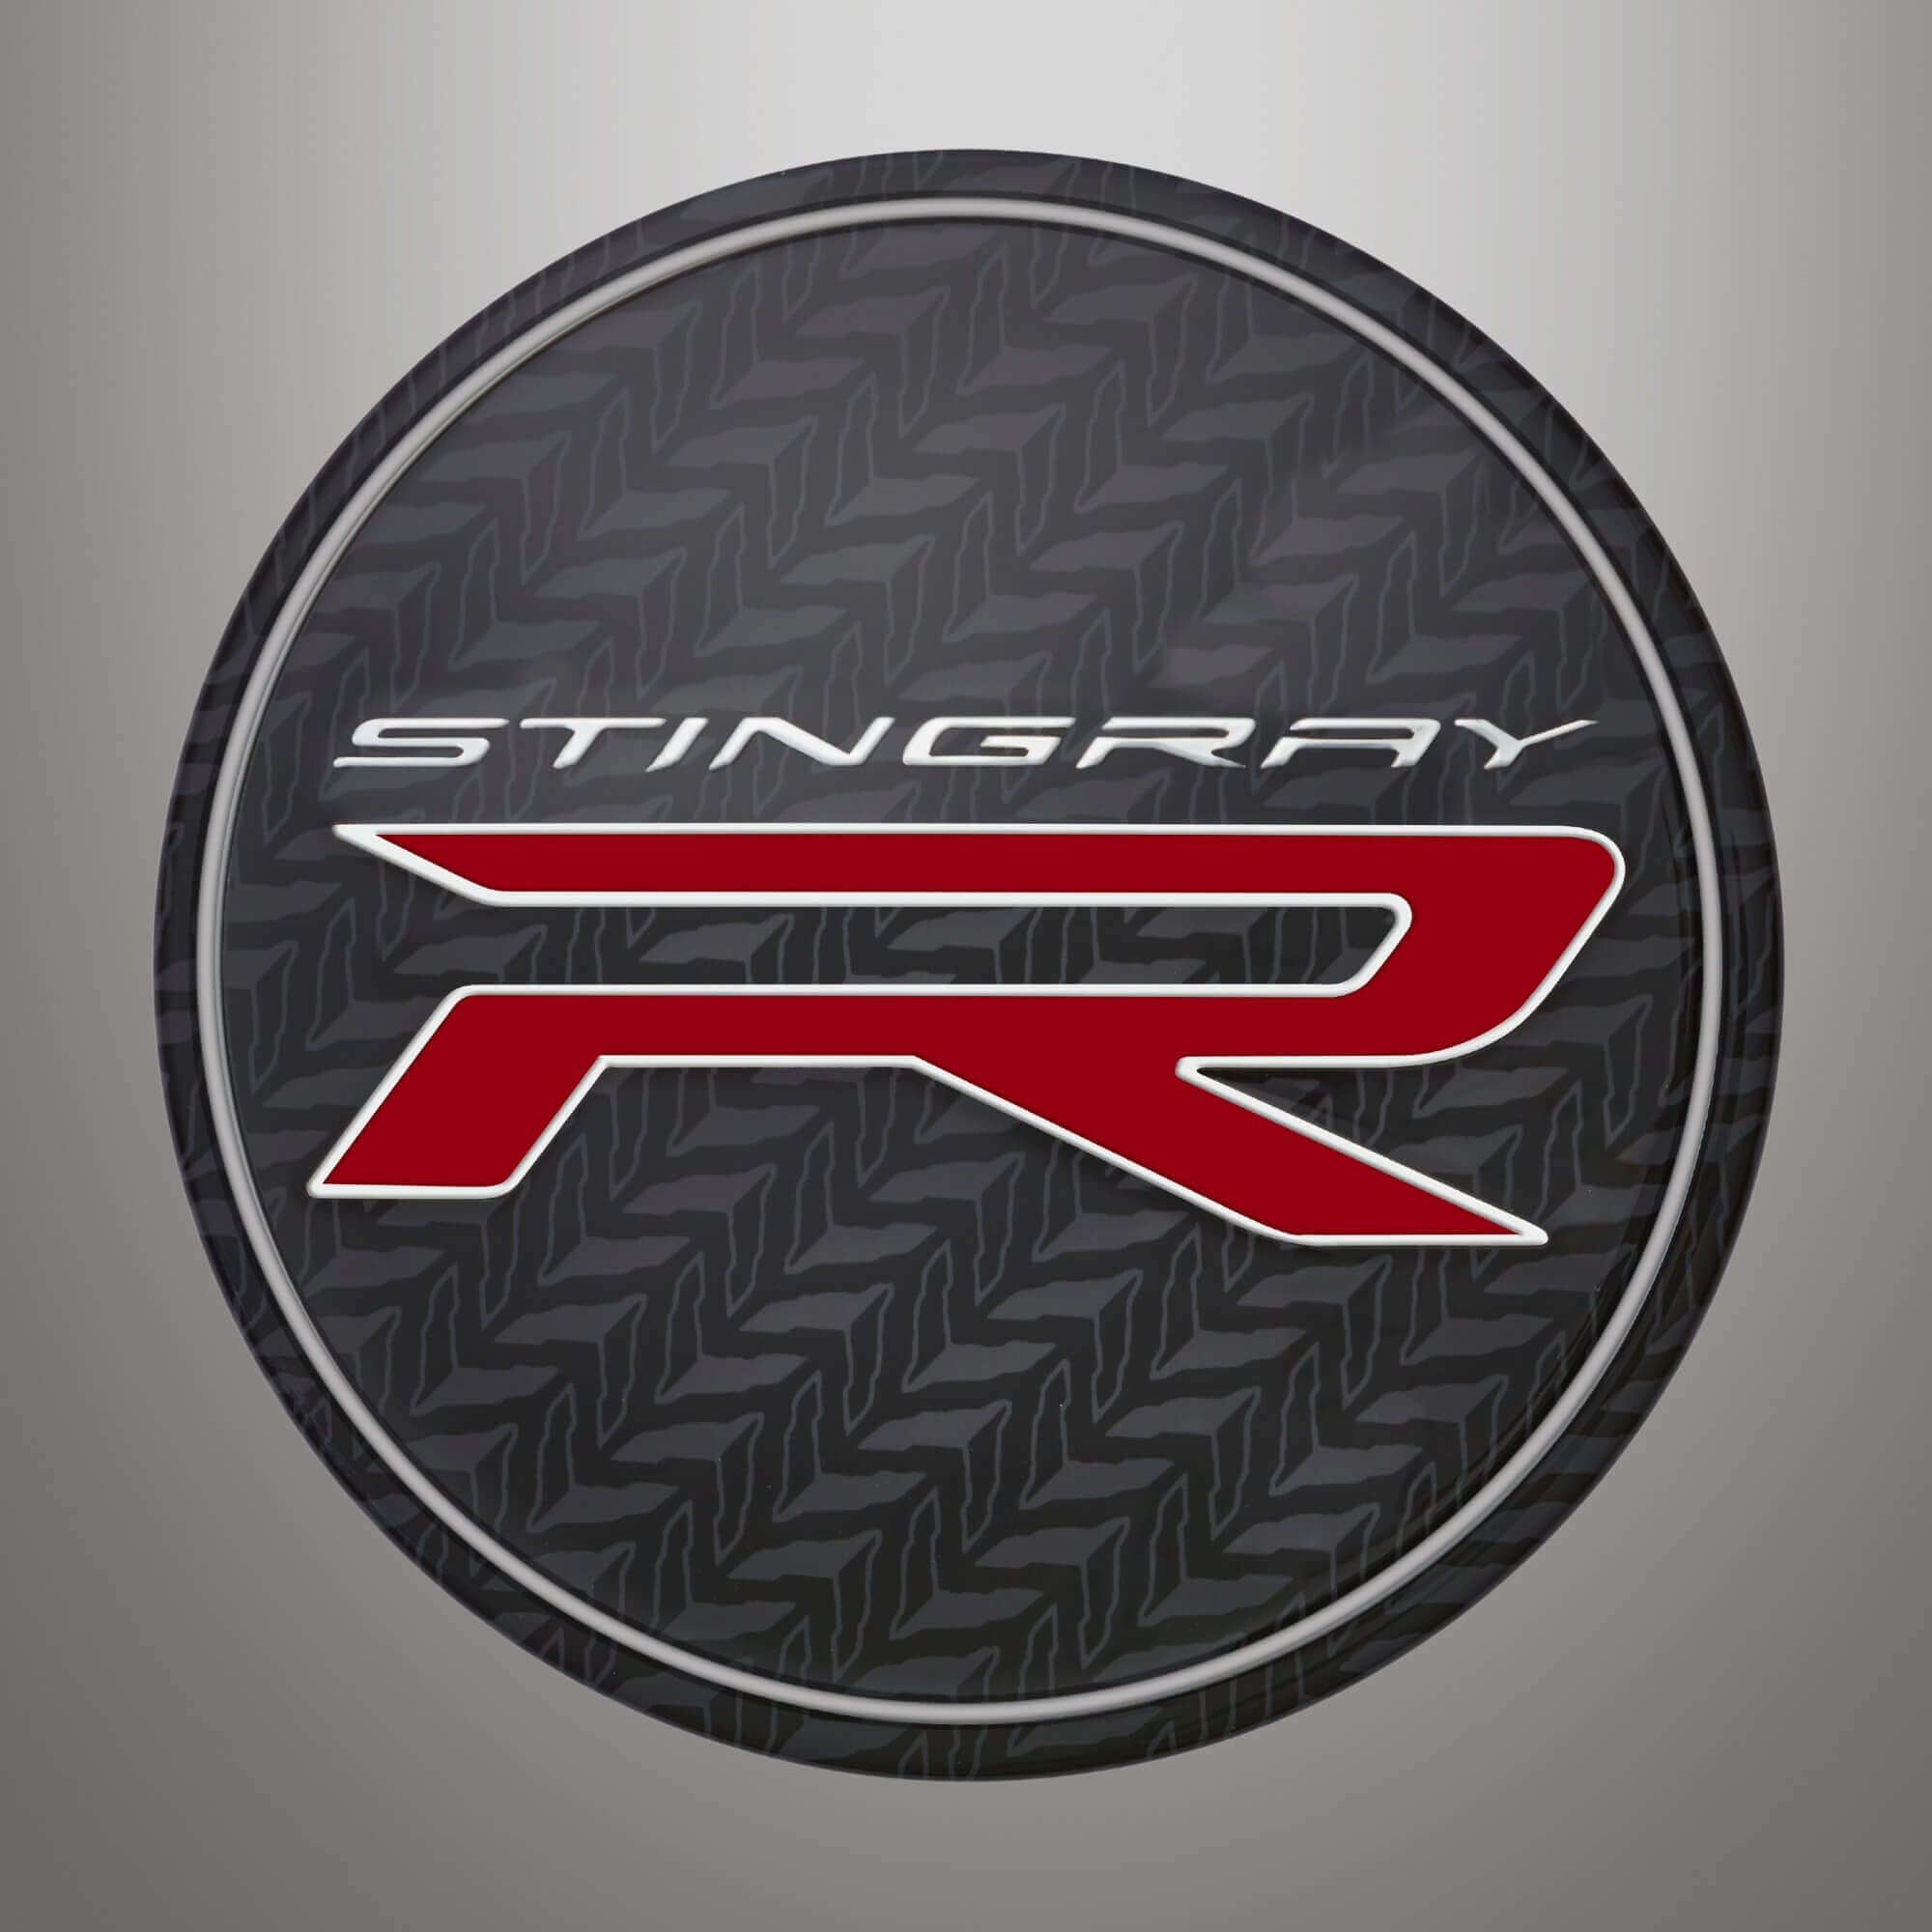 Stingray R logo wheel center caps $260